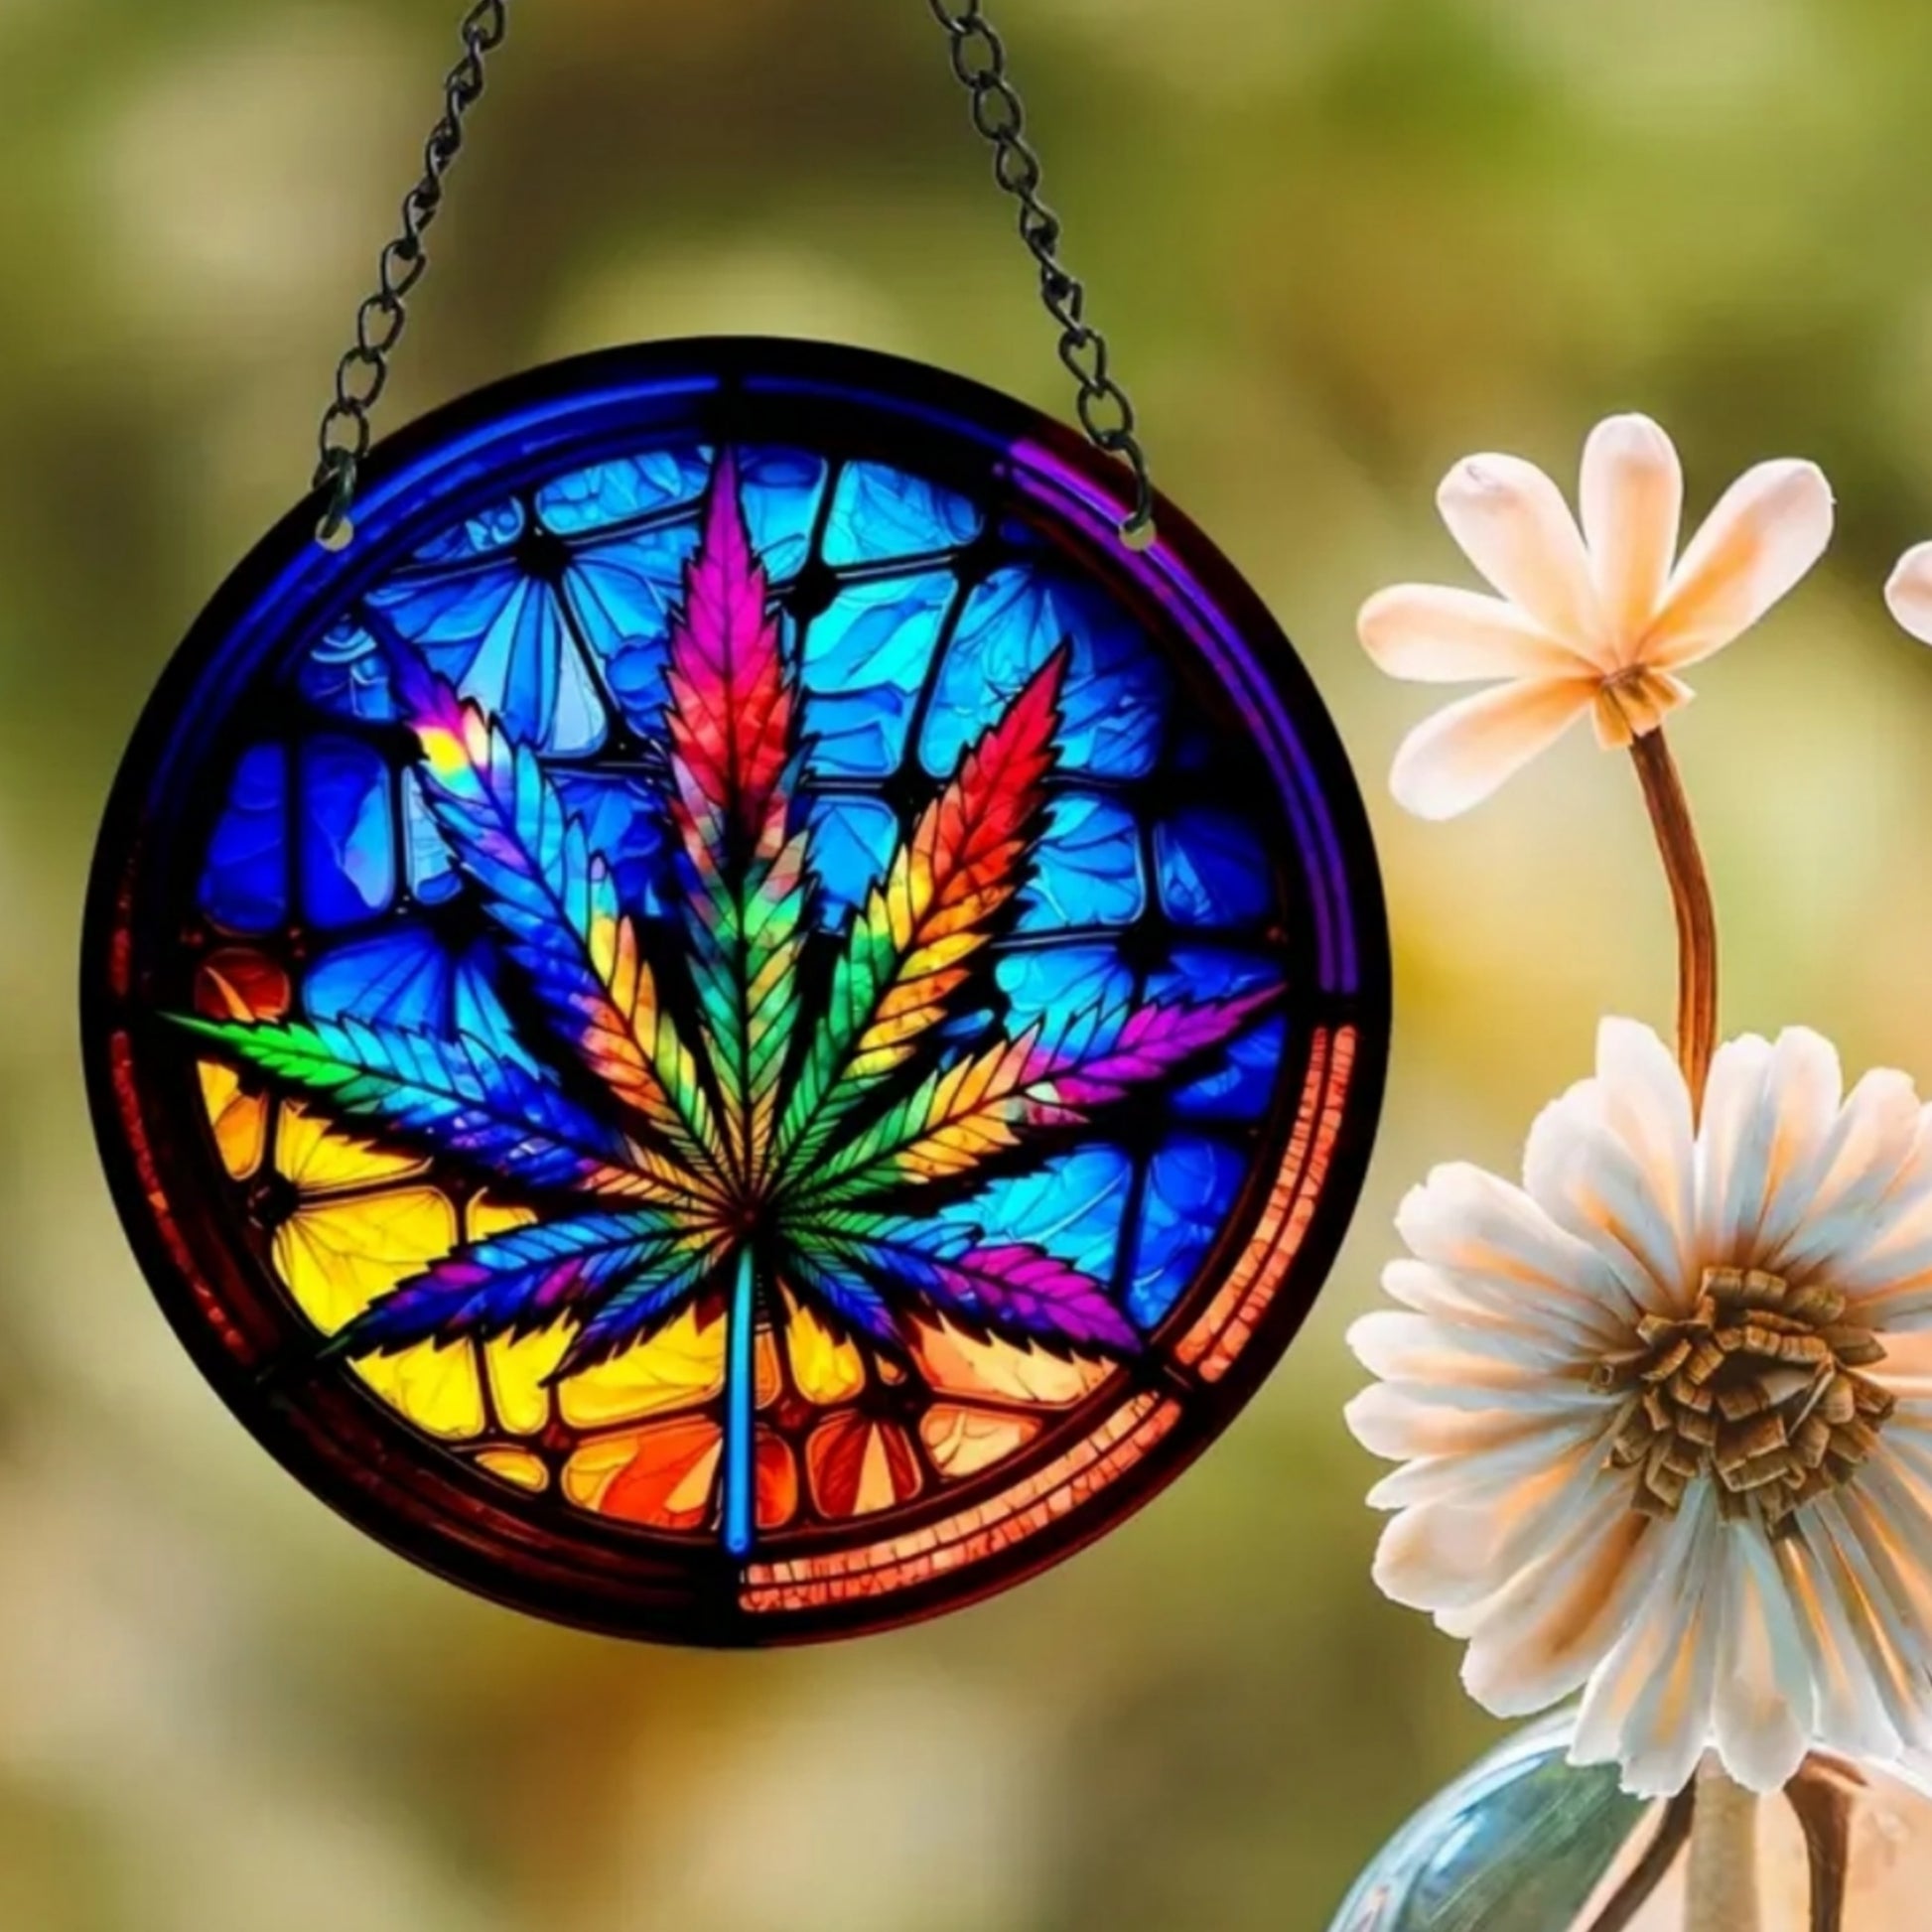 Stainglass Style Suncatcher | Pot Leaf Image High Quality Round Hanging Window Decor - A Gothic Universe - Sun Catcher